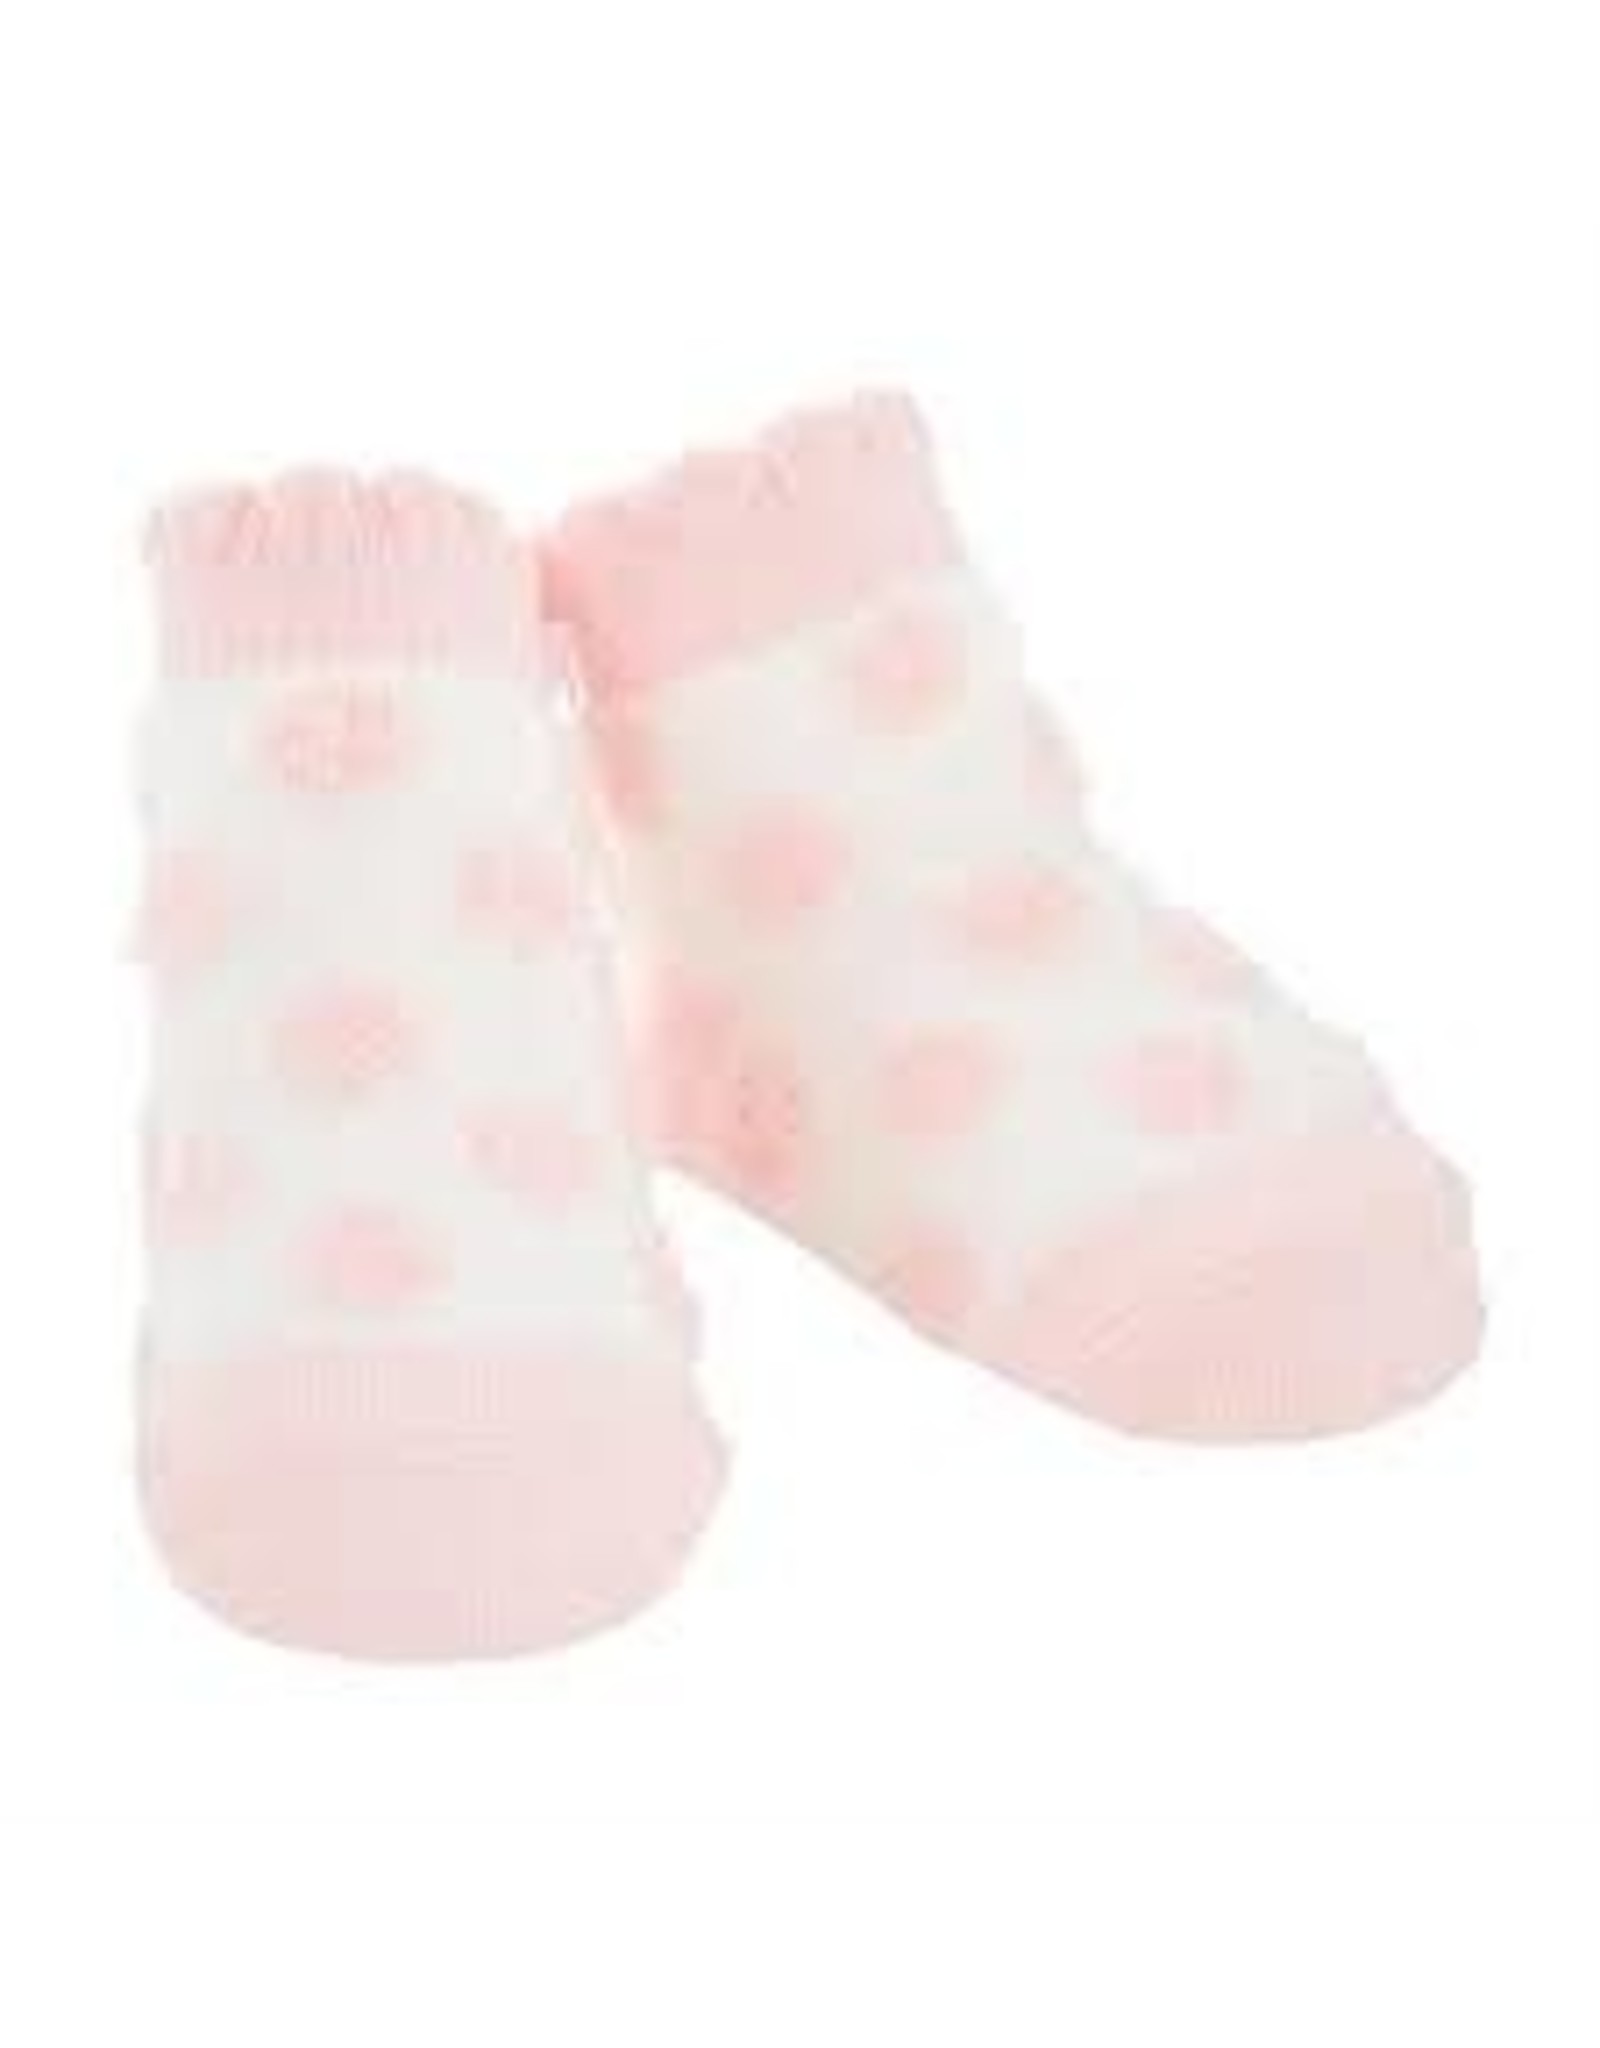 Mudpie Pink Chenille Dot Socks